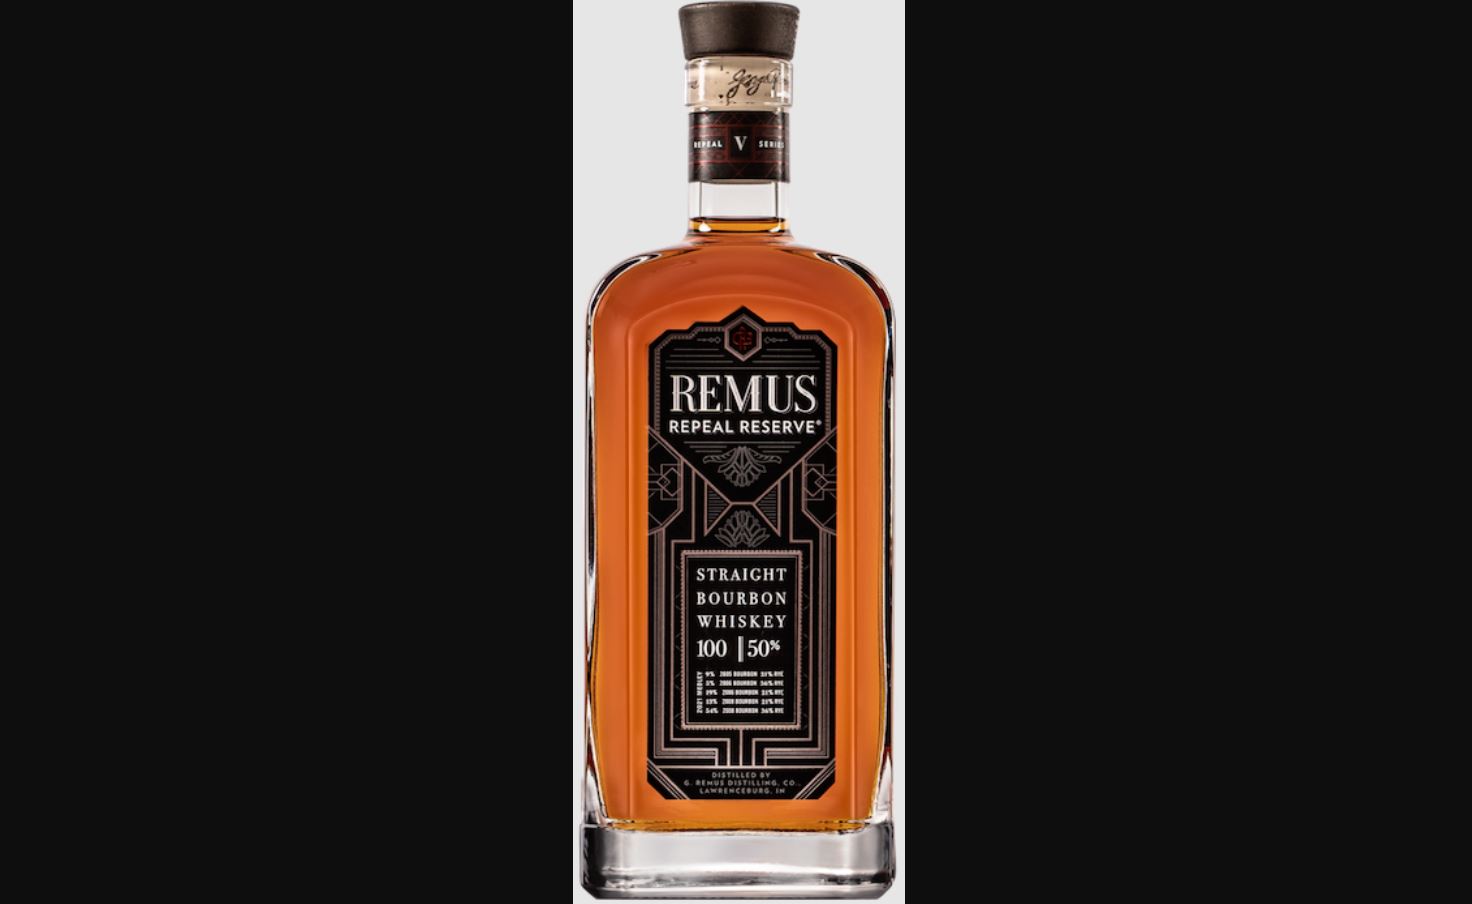 Remus Repeal Reserve Series V Straight Bourbon